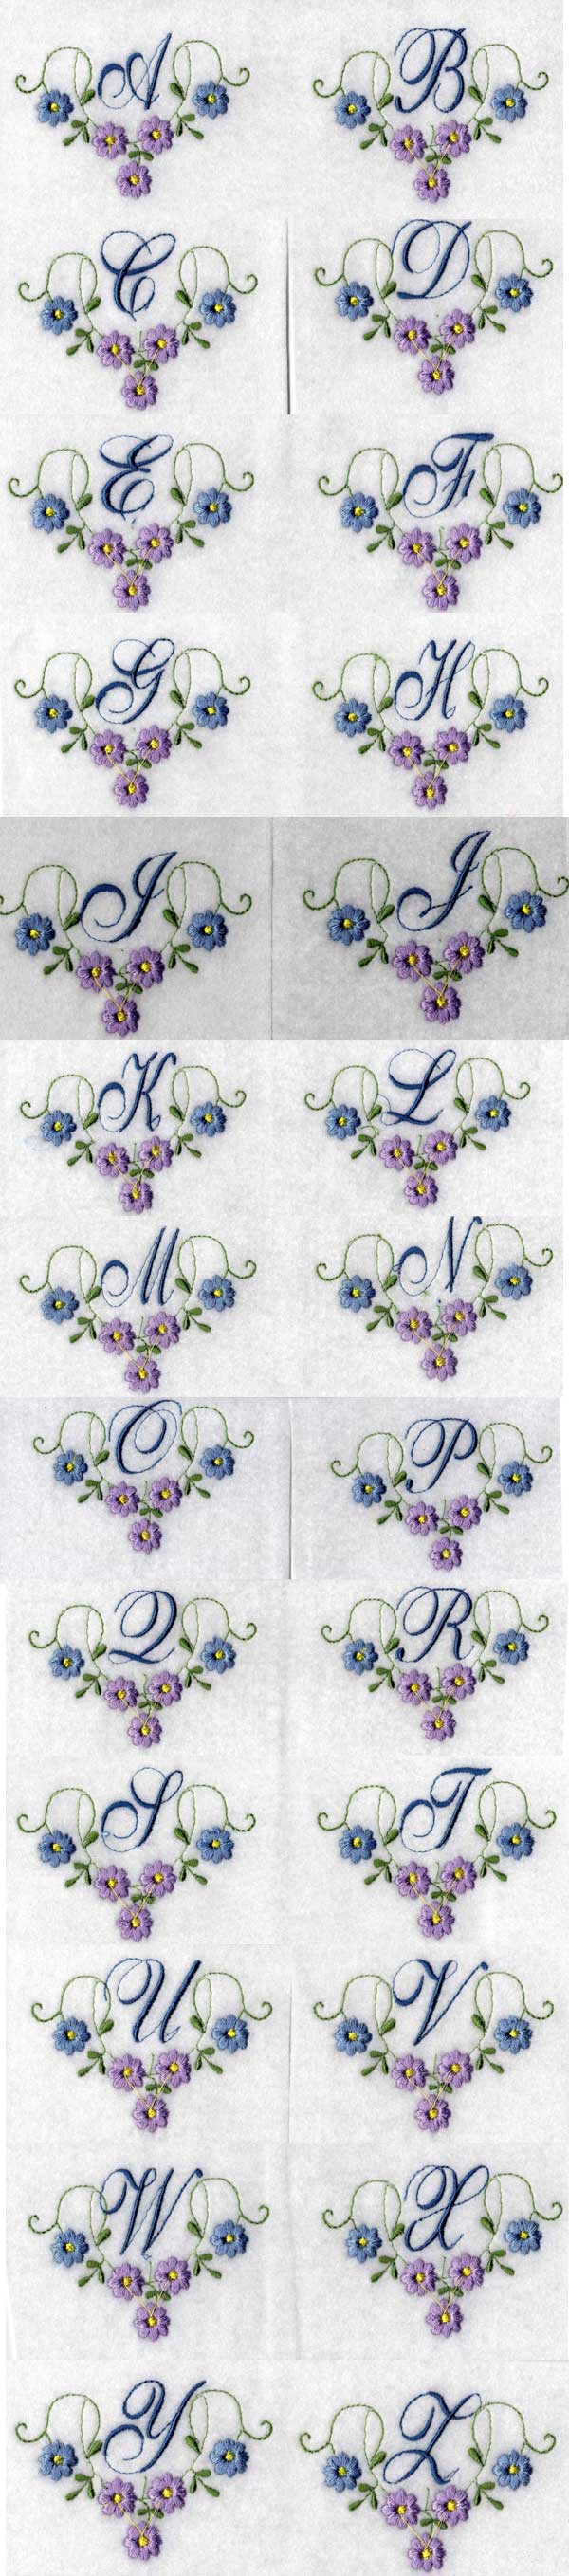 Daisy Monogram Embroidery Machine Design Details